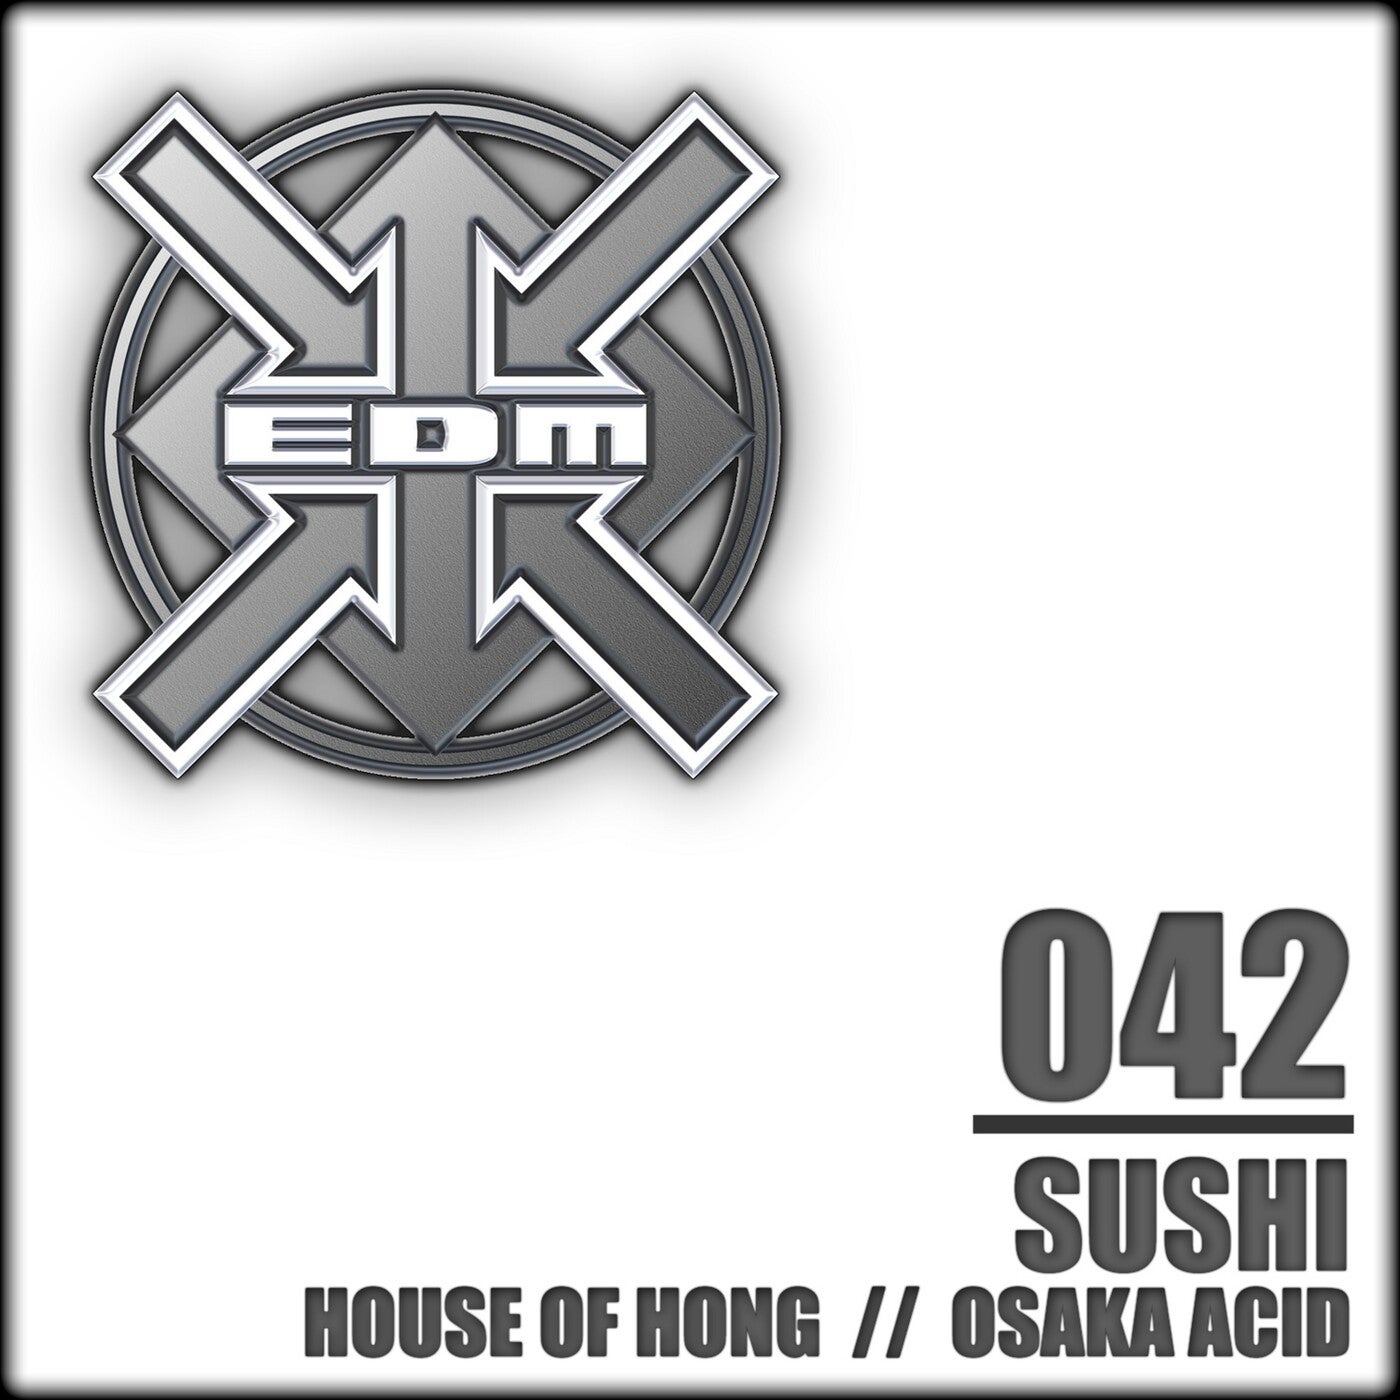 House of Hong / Osaka Acid